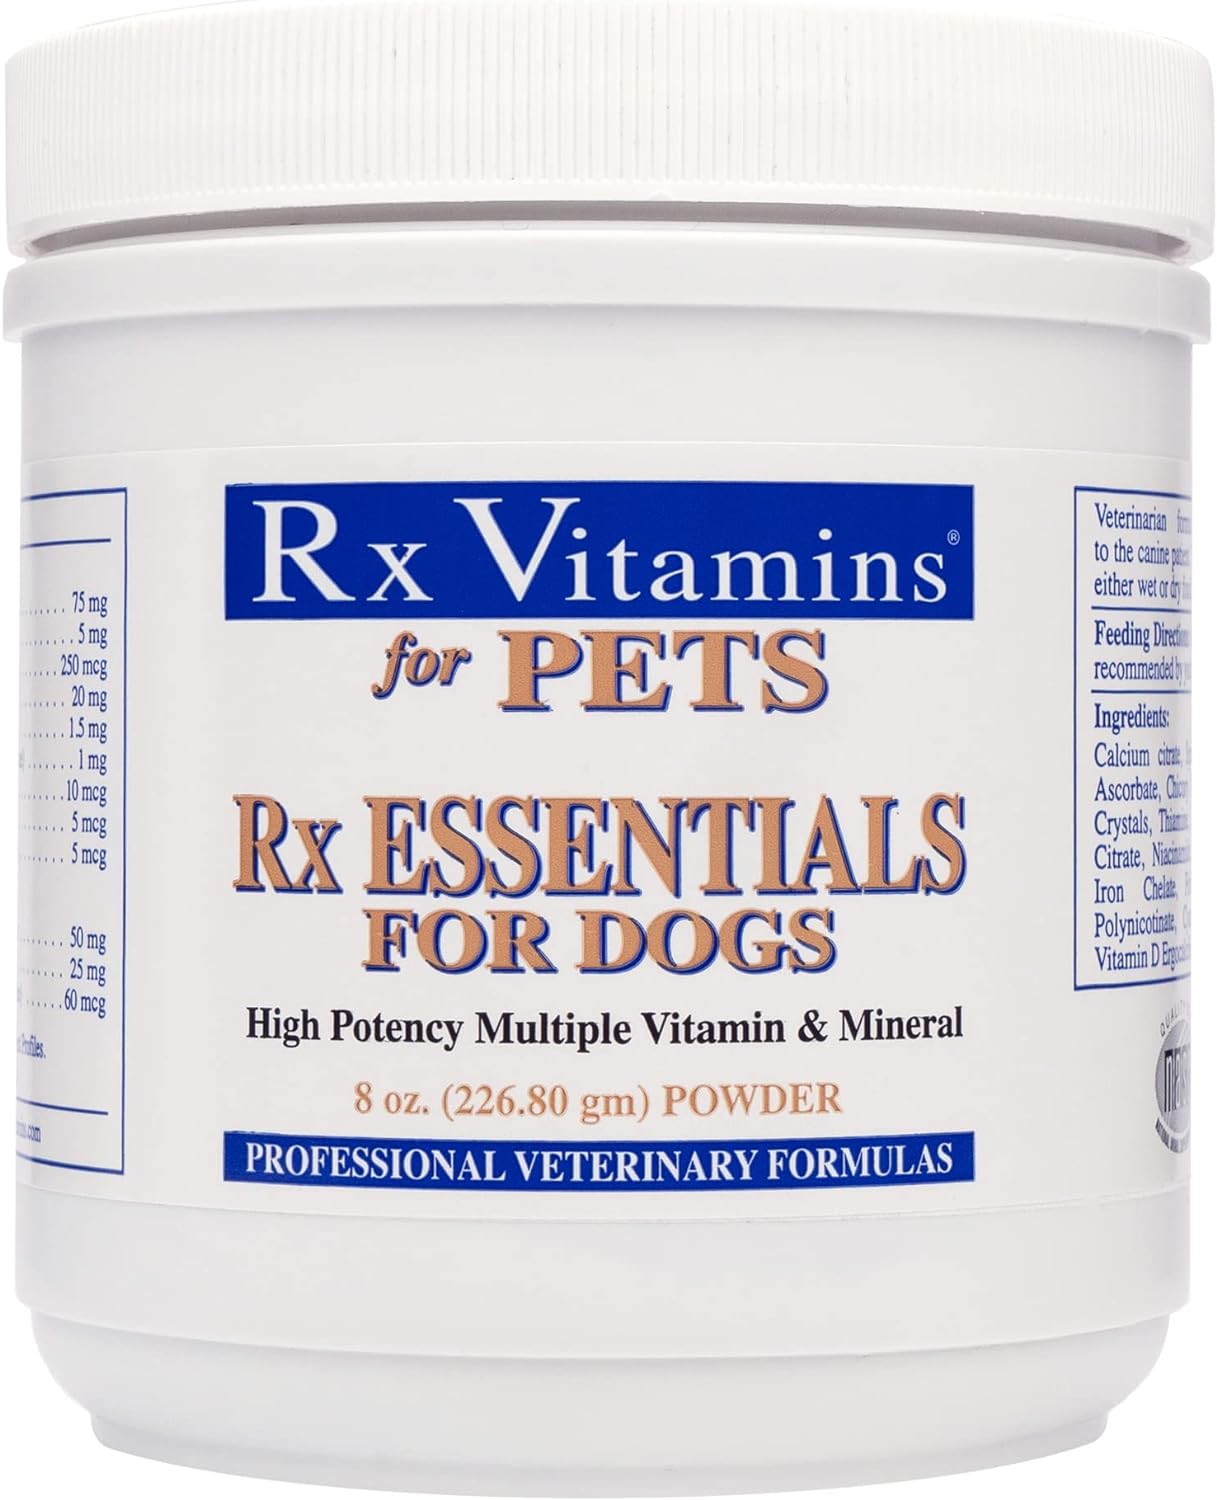 Rx Vitamins Essentials for Dogs - Vitamin & Mineral Multivitamin - Supports Immune System Digestive Health & Bone Health - Powder 8 oz/226.80g